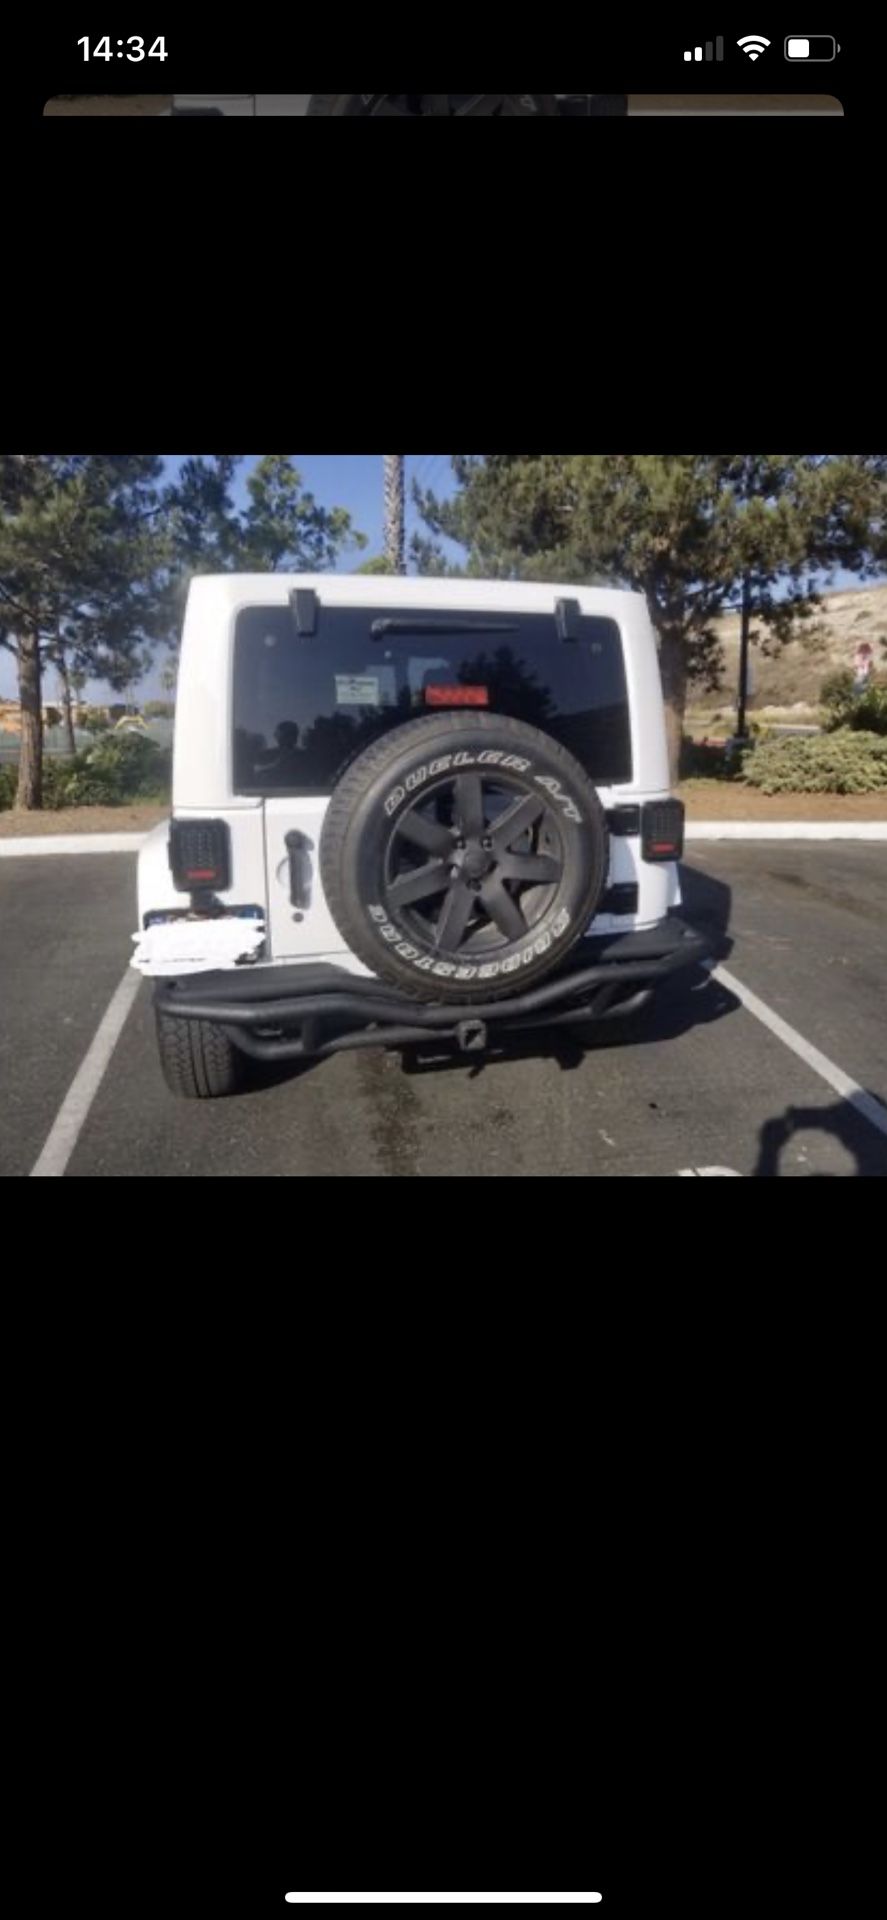 Jeep Sahara tires and wheels